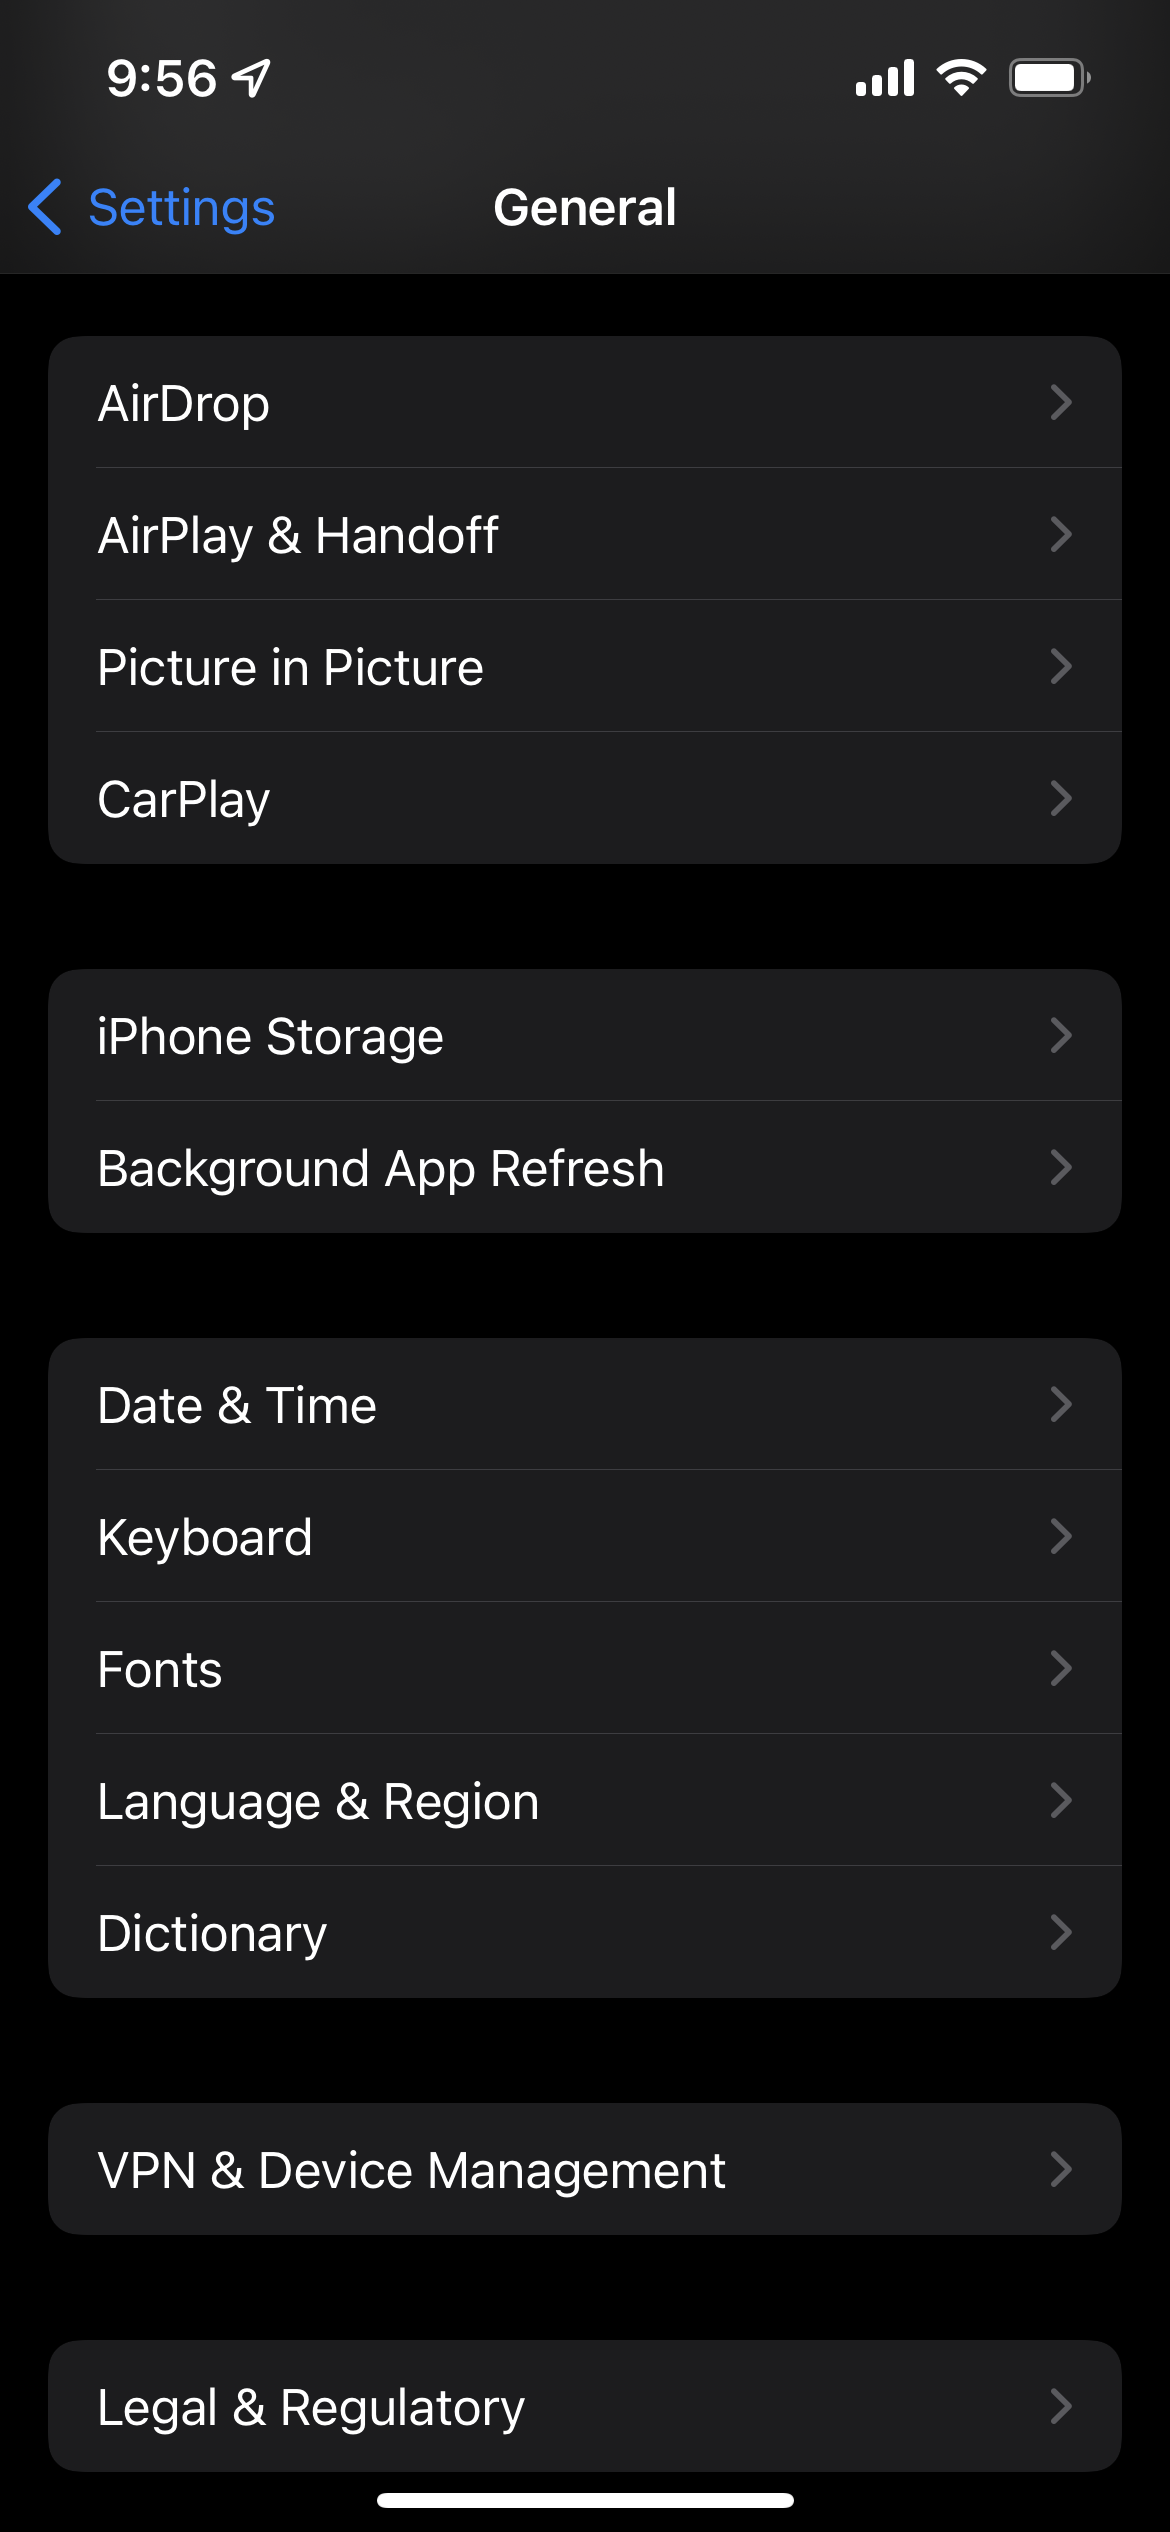 General options in the iOS 15 Settings app